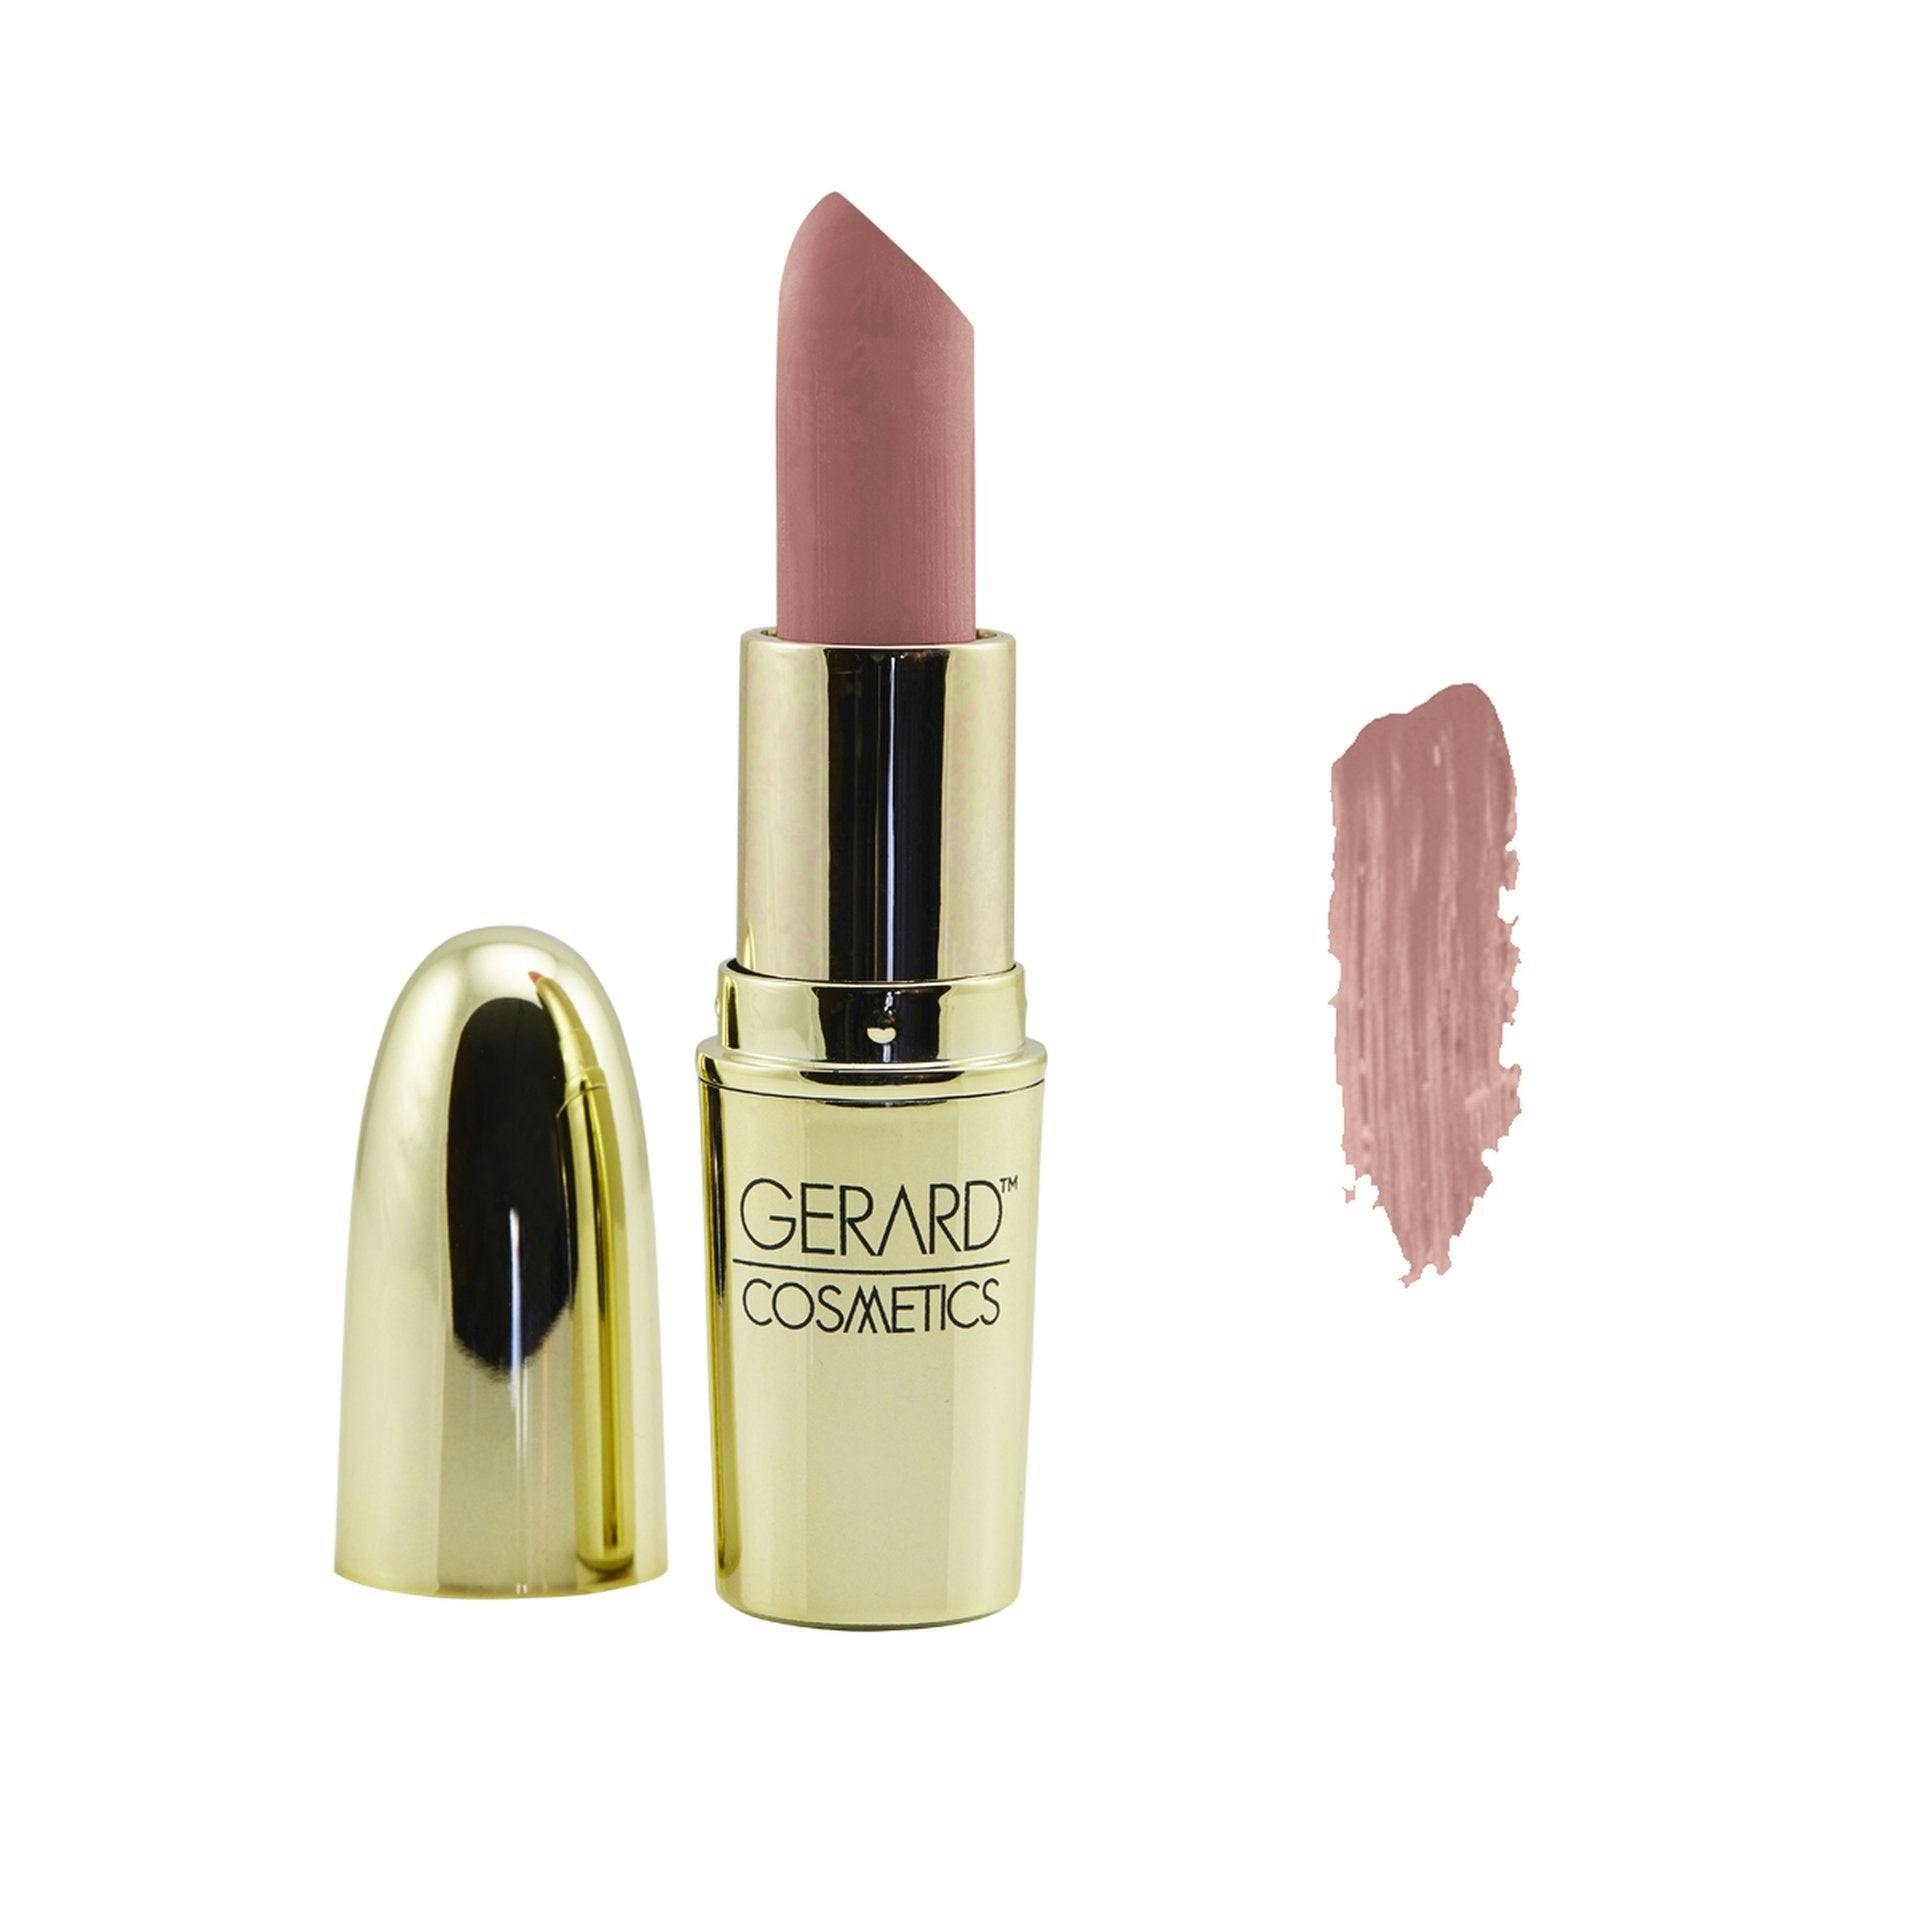 Gerard Cosmetics Lipstick 4.0g